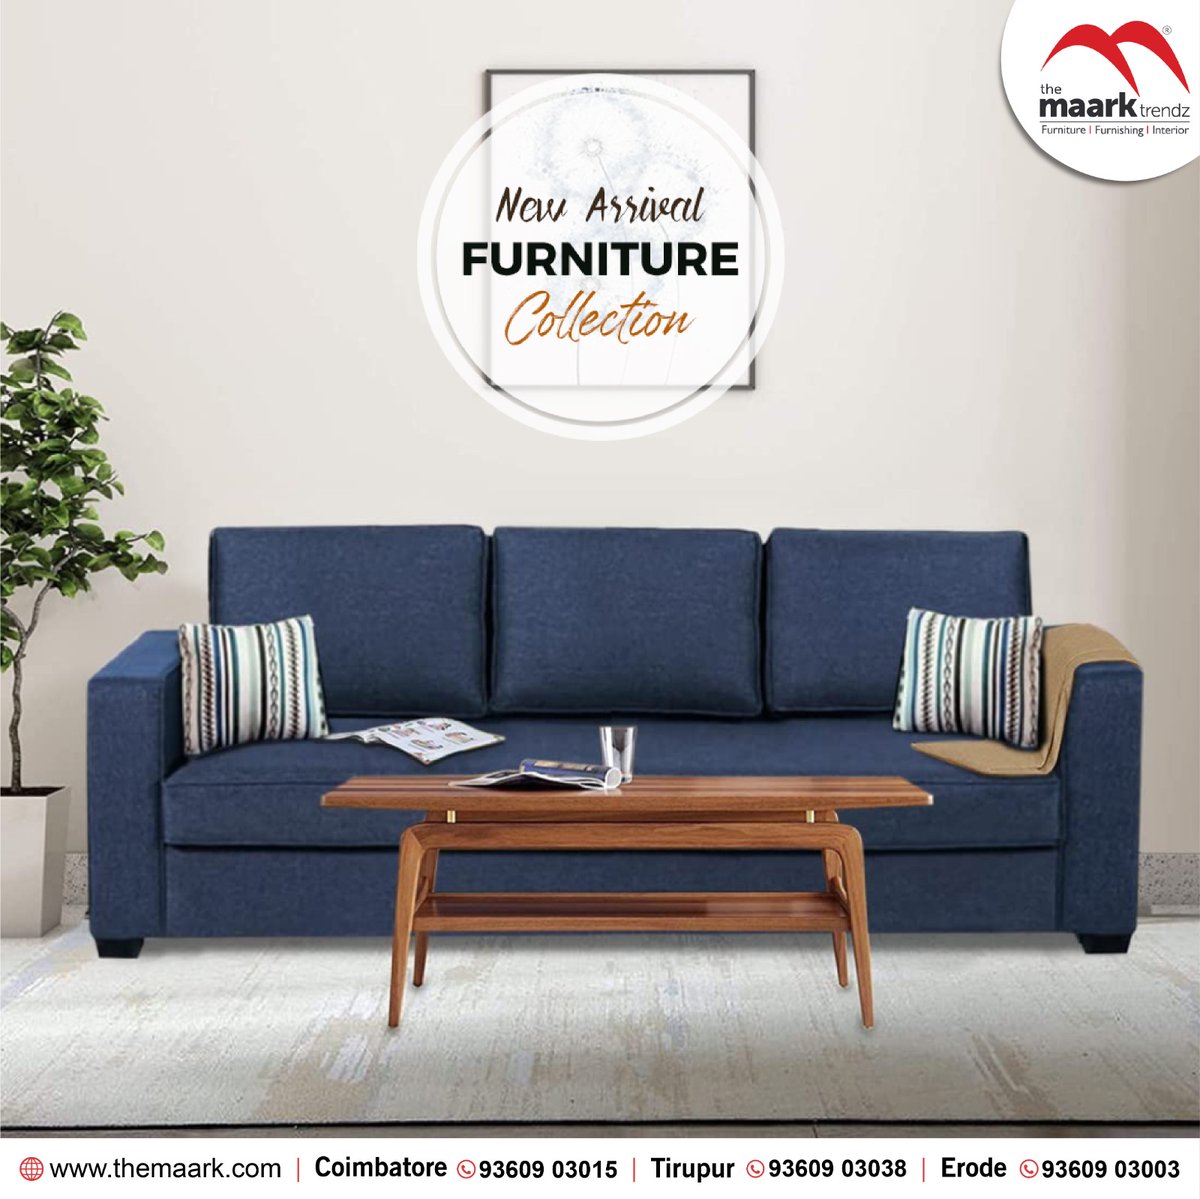 THE MAARK TRENDZ..( #StylishFurniture )

The design creates culture. 
Buy now: themaark.com | Call us: 9677823456
#sofaset #sofadesign #furnituredesign #luxurylifestyle #sofa #officefurniture #interiors #Furnished #luxurydesign #decor #homedesign #furnituremakeover